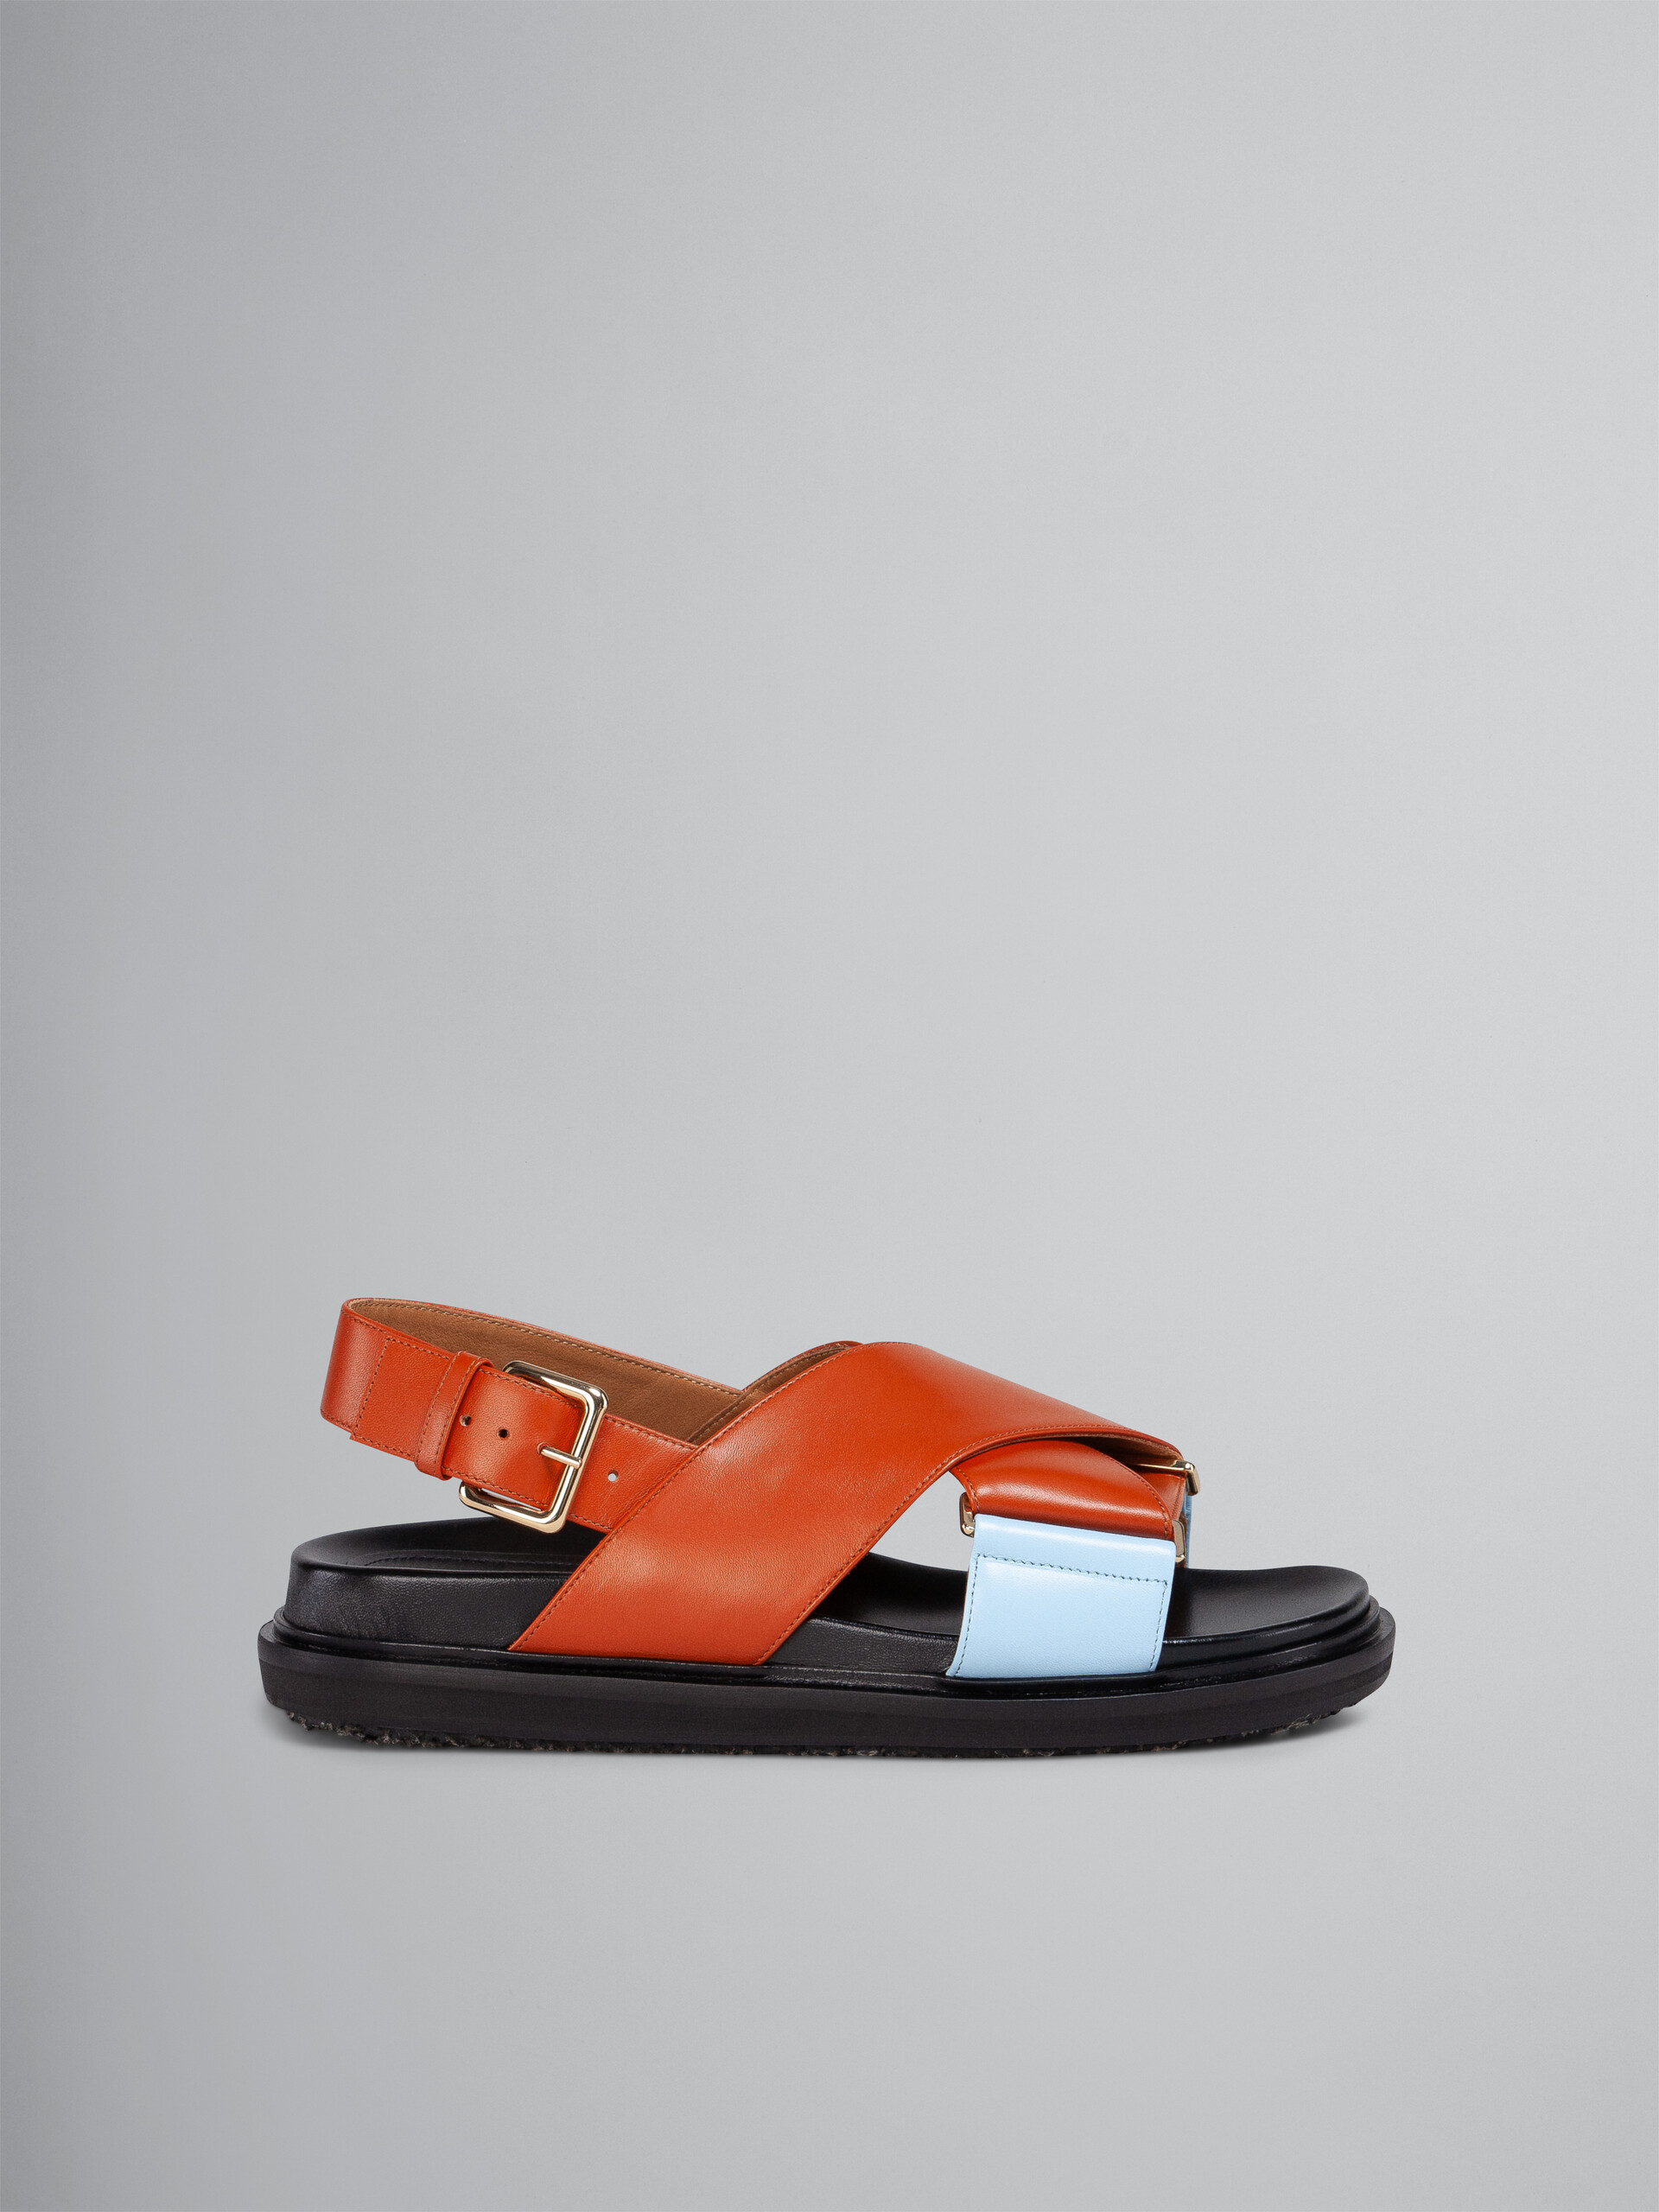 Sky blue and orange leather Fussbett - Sandals - Image 1